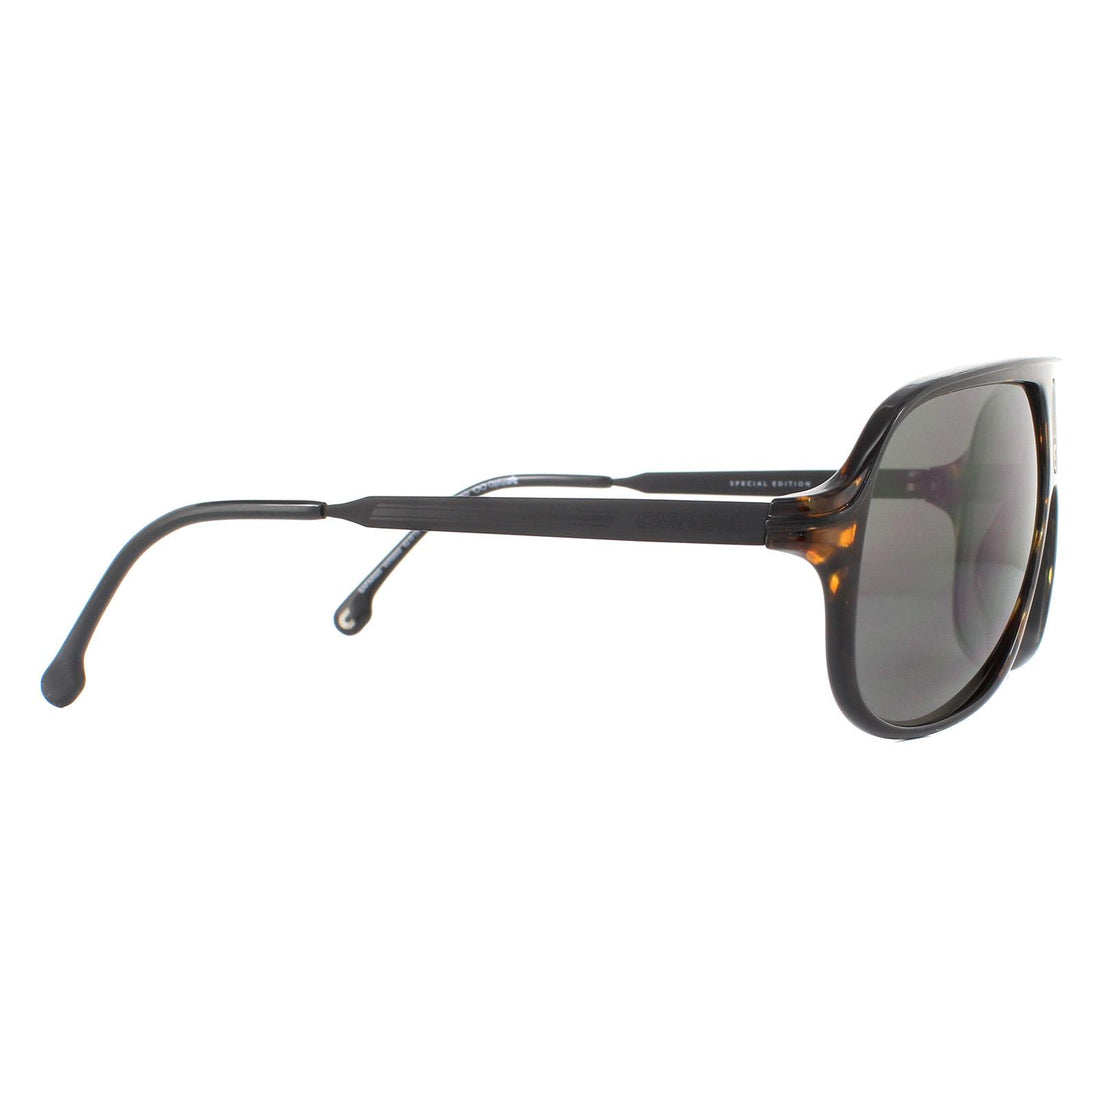 Carrera Sunglasses Safari 65 WR9 M9 Havana Grey Polarised